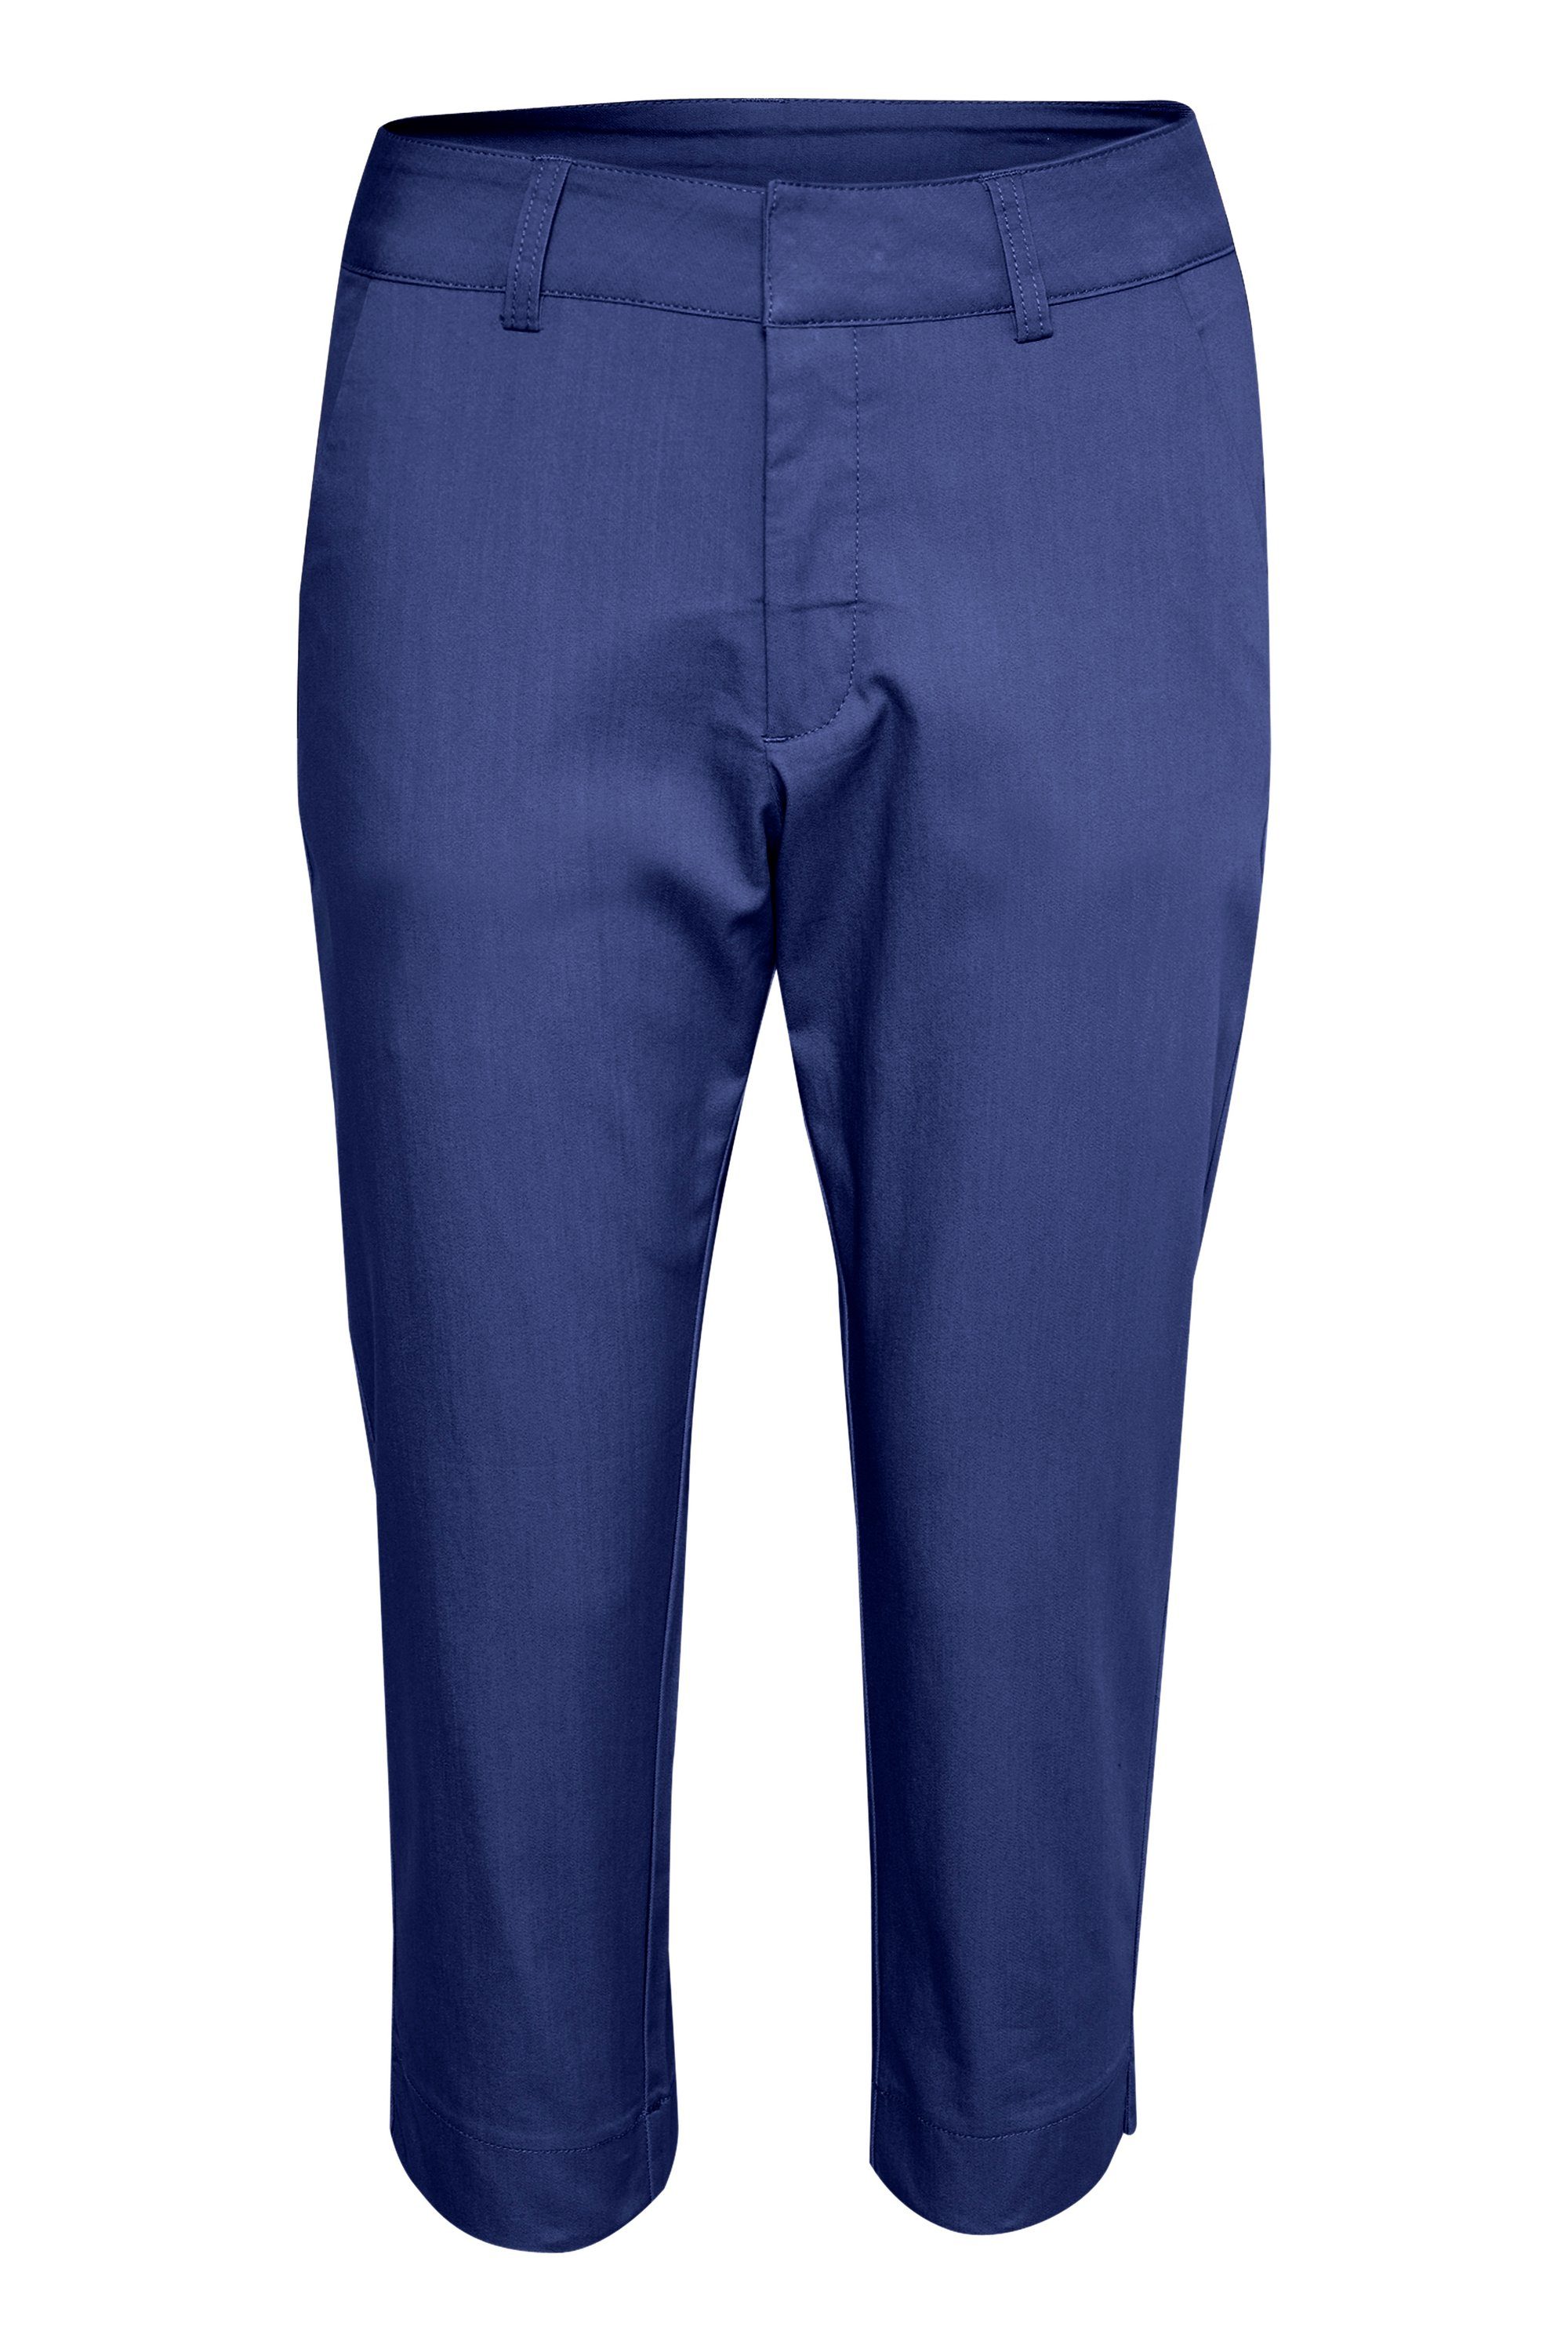 KAFFE Anzughose Pants Suiting KAlea Vintage Indigo